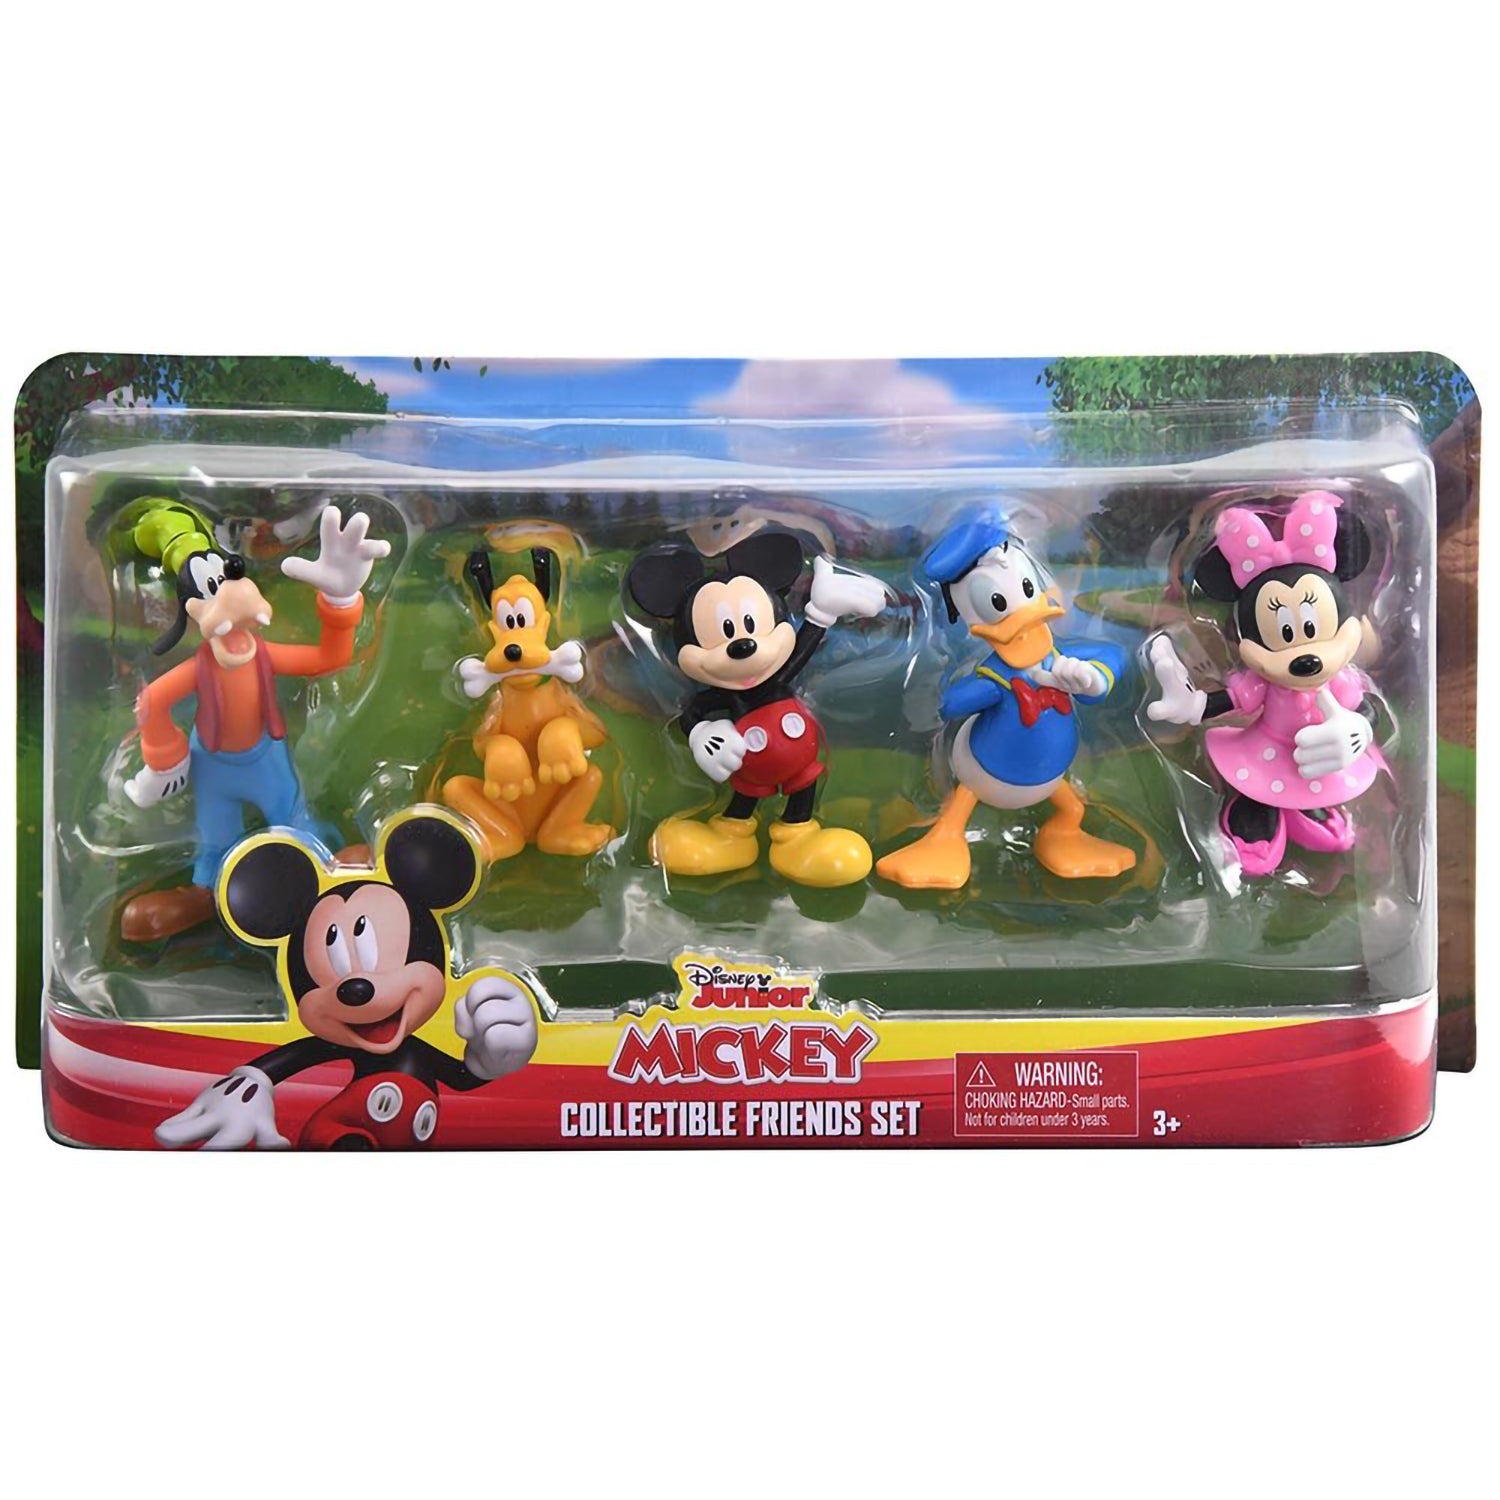 Mickey Mouse Disney Junior Kitchen Play Set